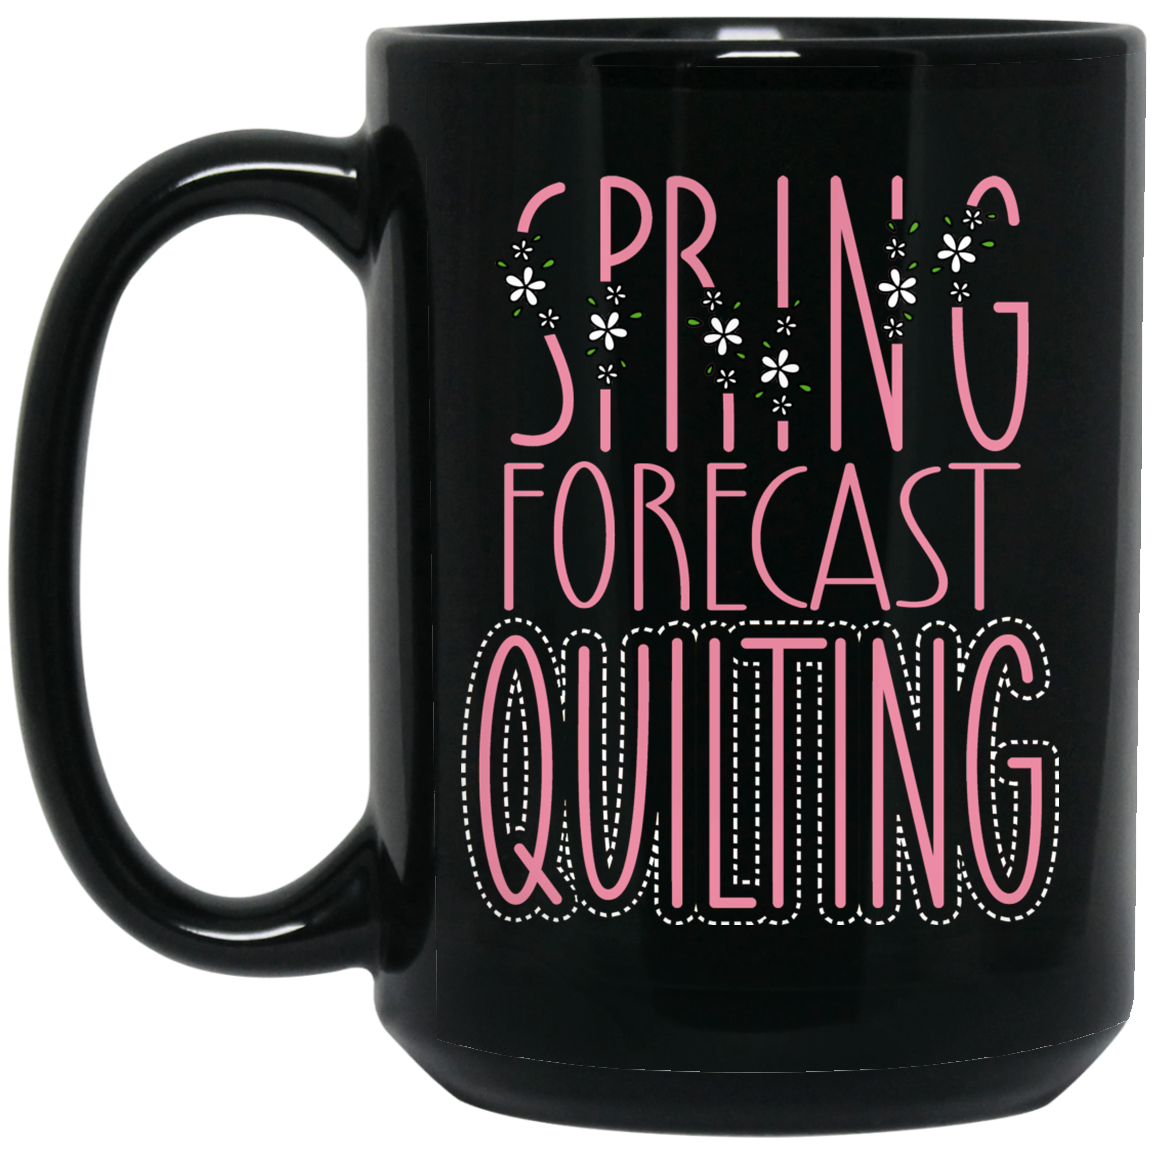 Spring Forecast Quilting Black Mugs